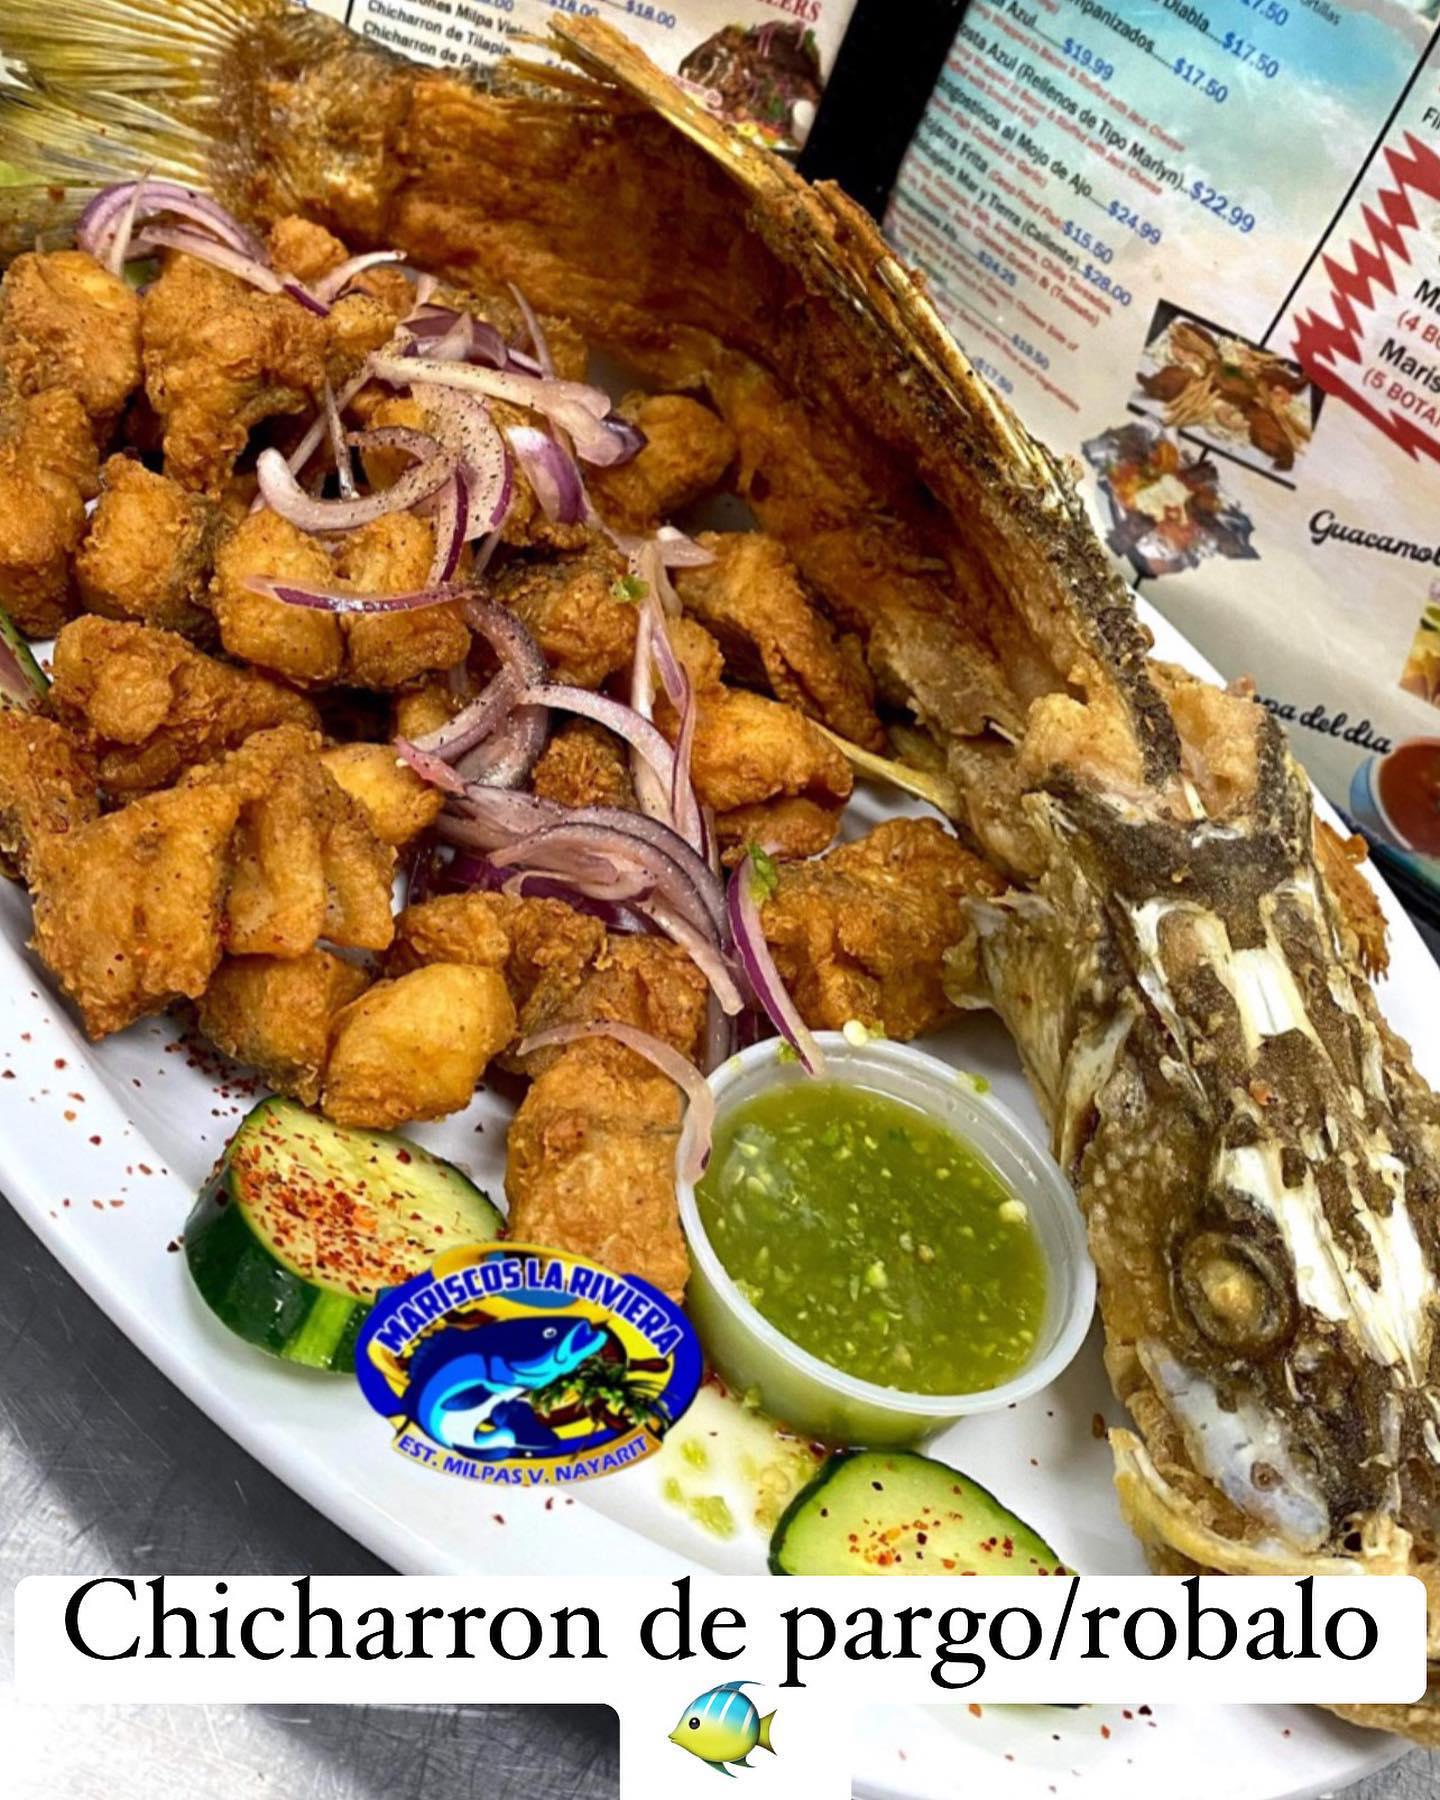 Mariscos La Riviera Estilo Milpas Viejas Nayarit CastanÌeda's Mexican Food- chicharron de pargo